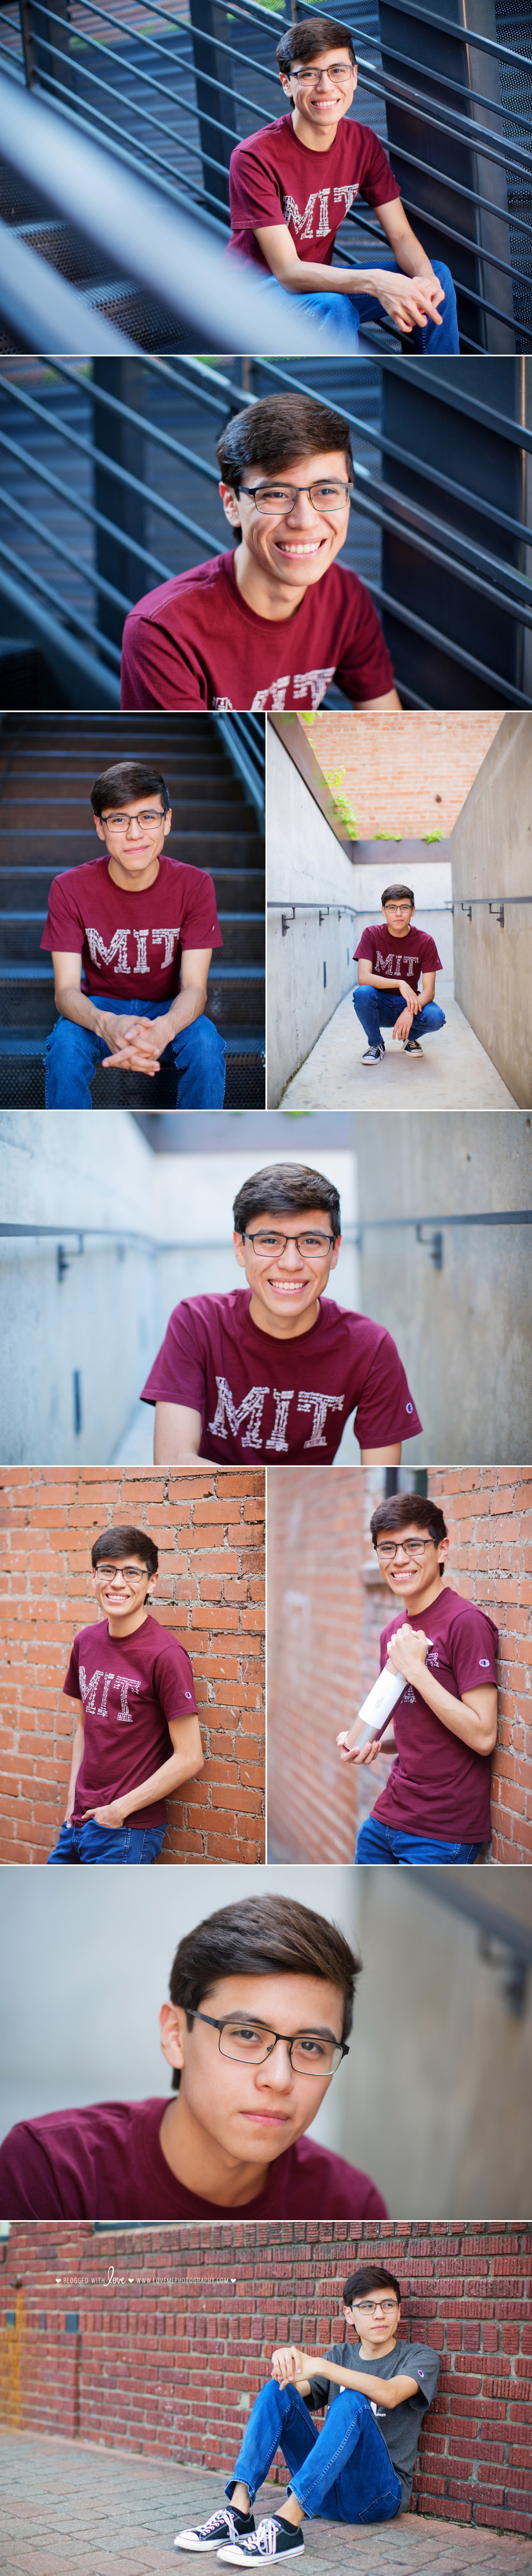 Senior portrait collage of guy posing wearing red MIT shirt of future school